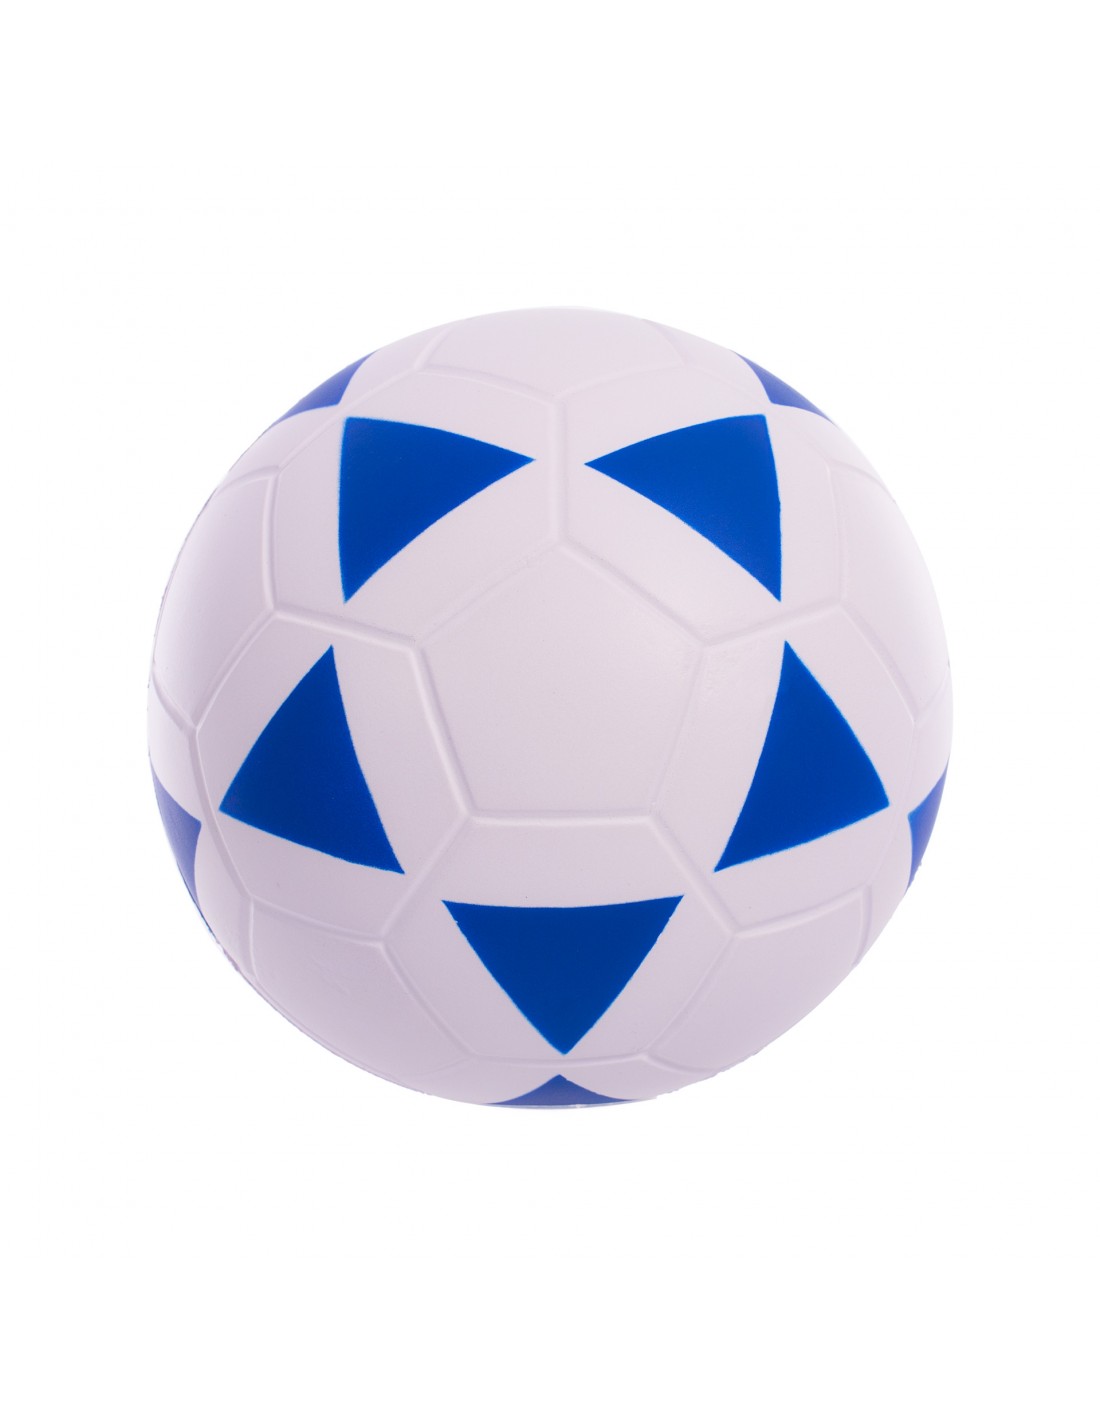 https://www.tecnoesport.com/46703-thickbox_default/pelota-foam-forma-balon-futbol-sala.jpg